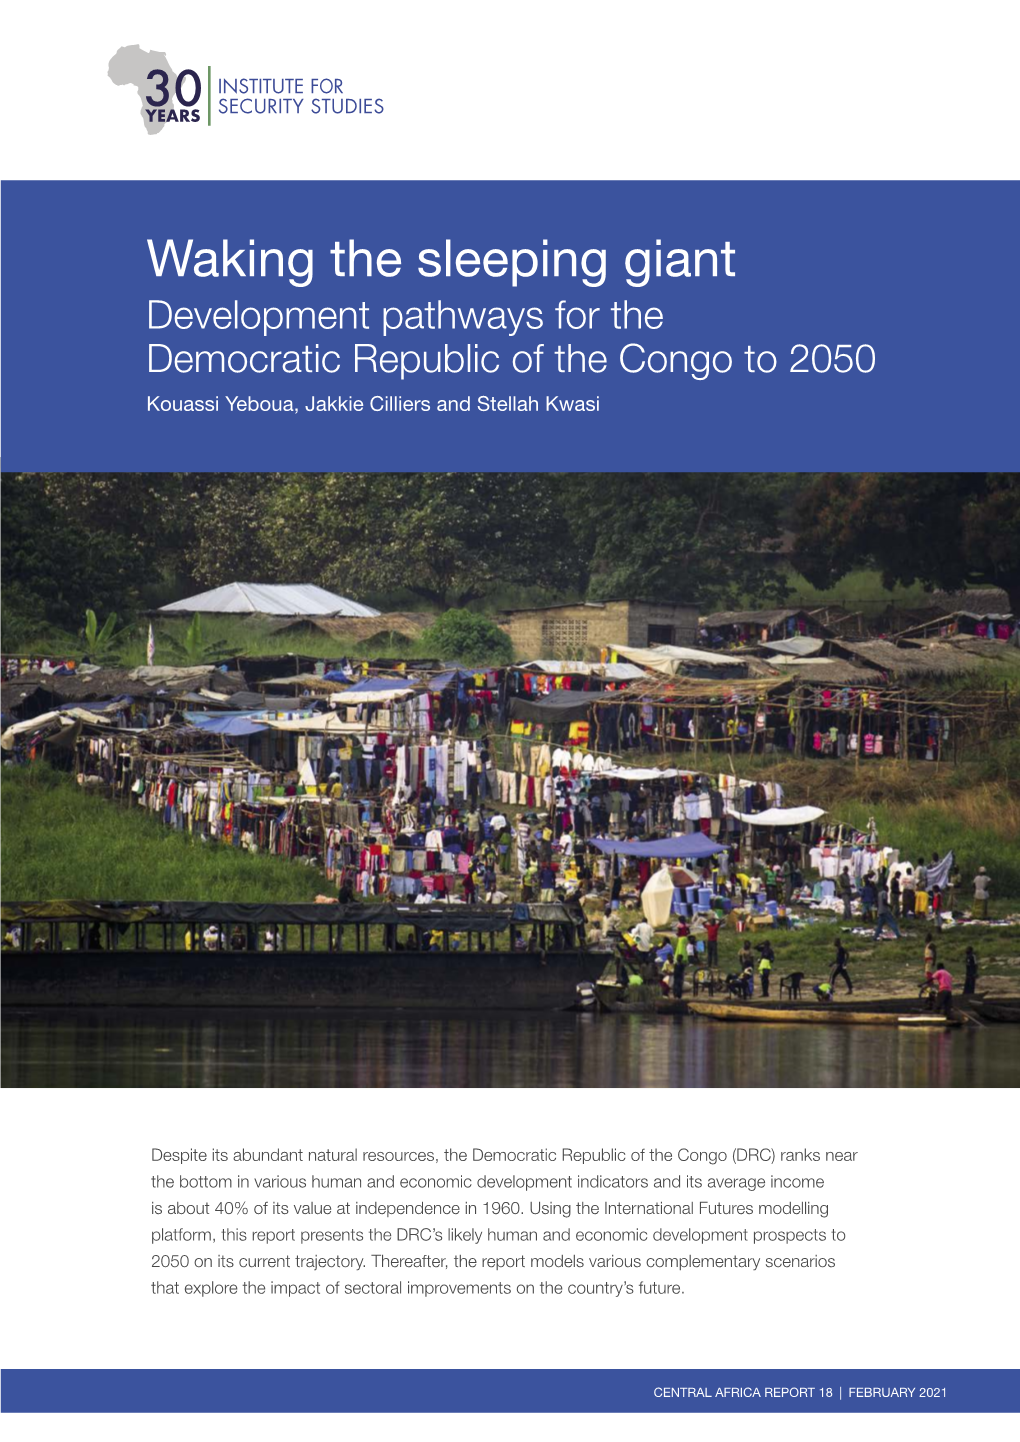 Waking the Sleeping Giant Development Pathways for the Democratic Republic of the Congo to 2050 Kouassi Yeboua, Jakkie Cilliers and Stellah Kwasi